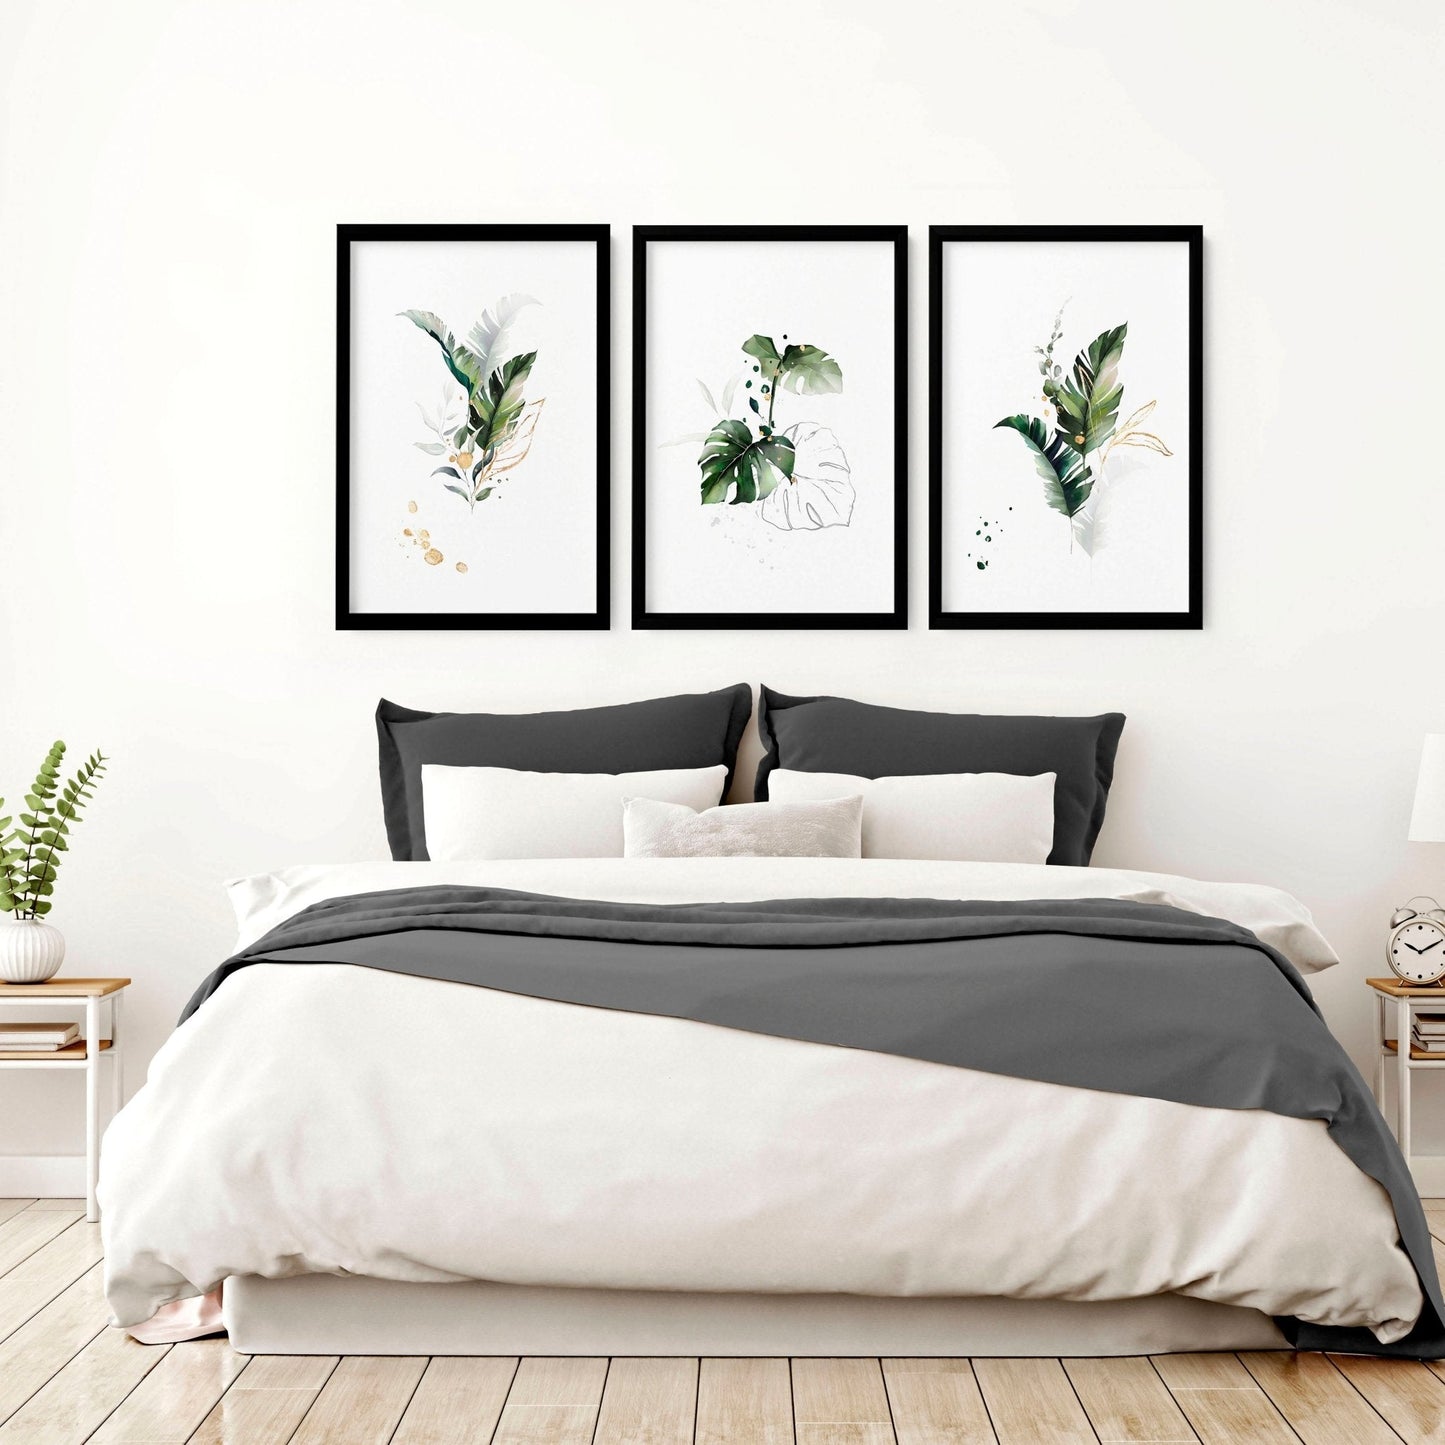 Bohemian Tropical bedroom decor | set of 3 wall art prints